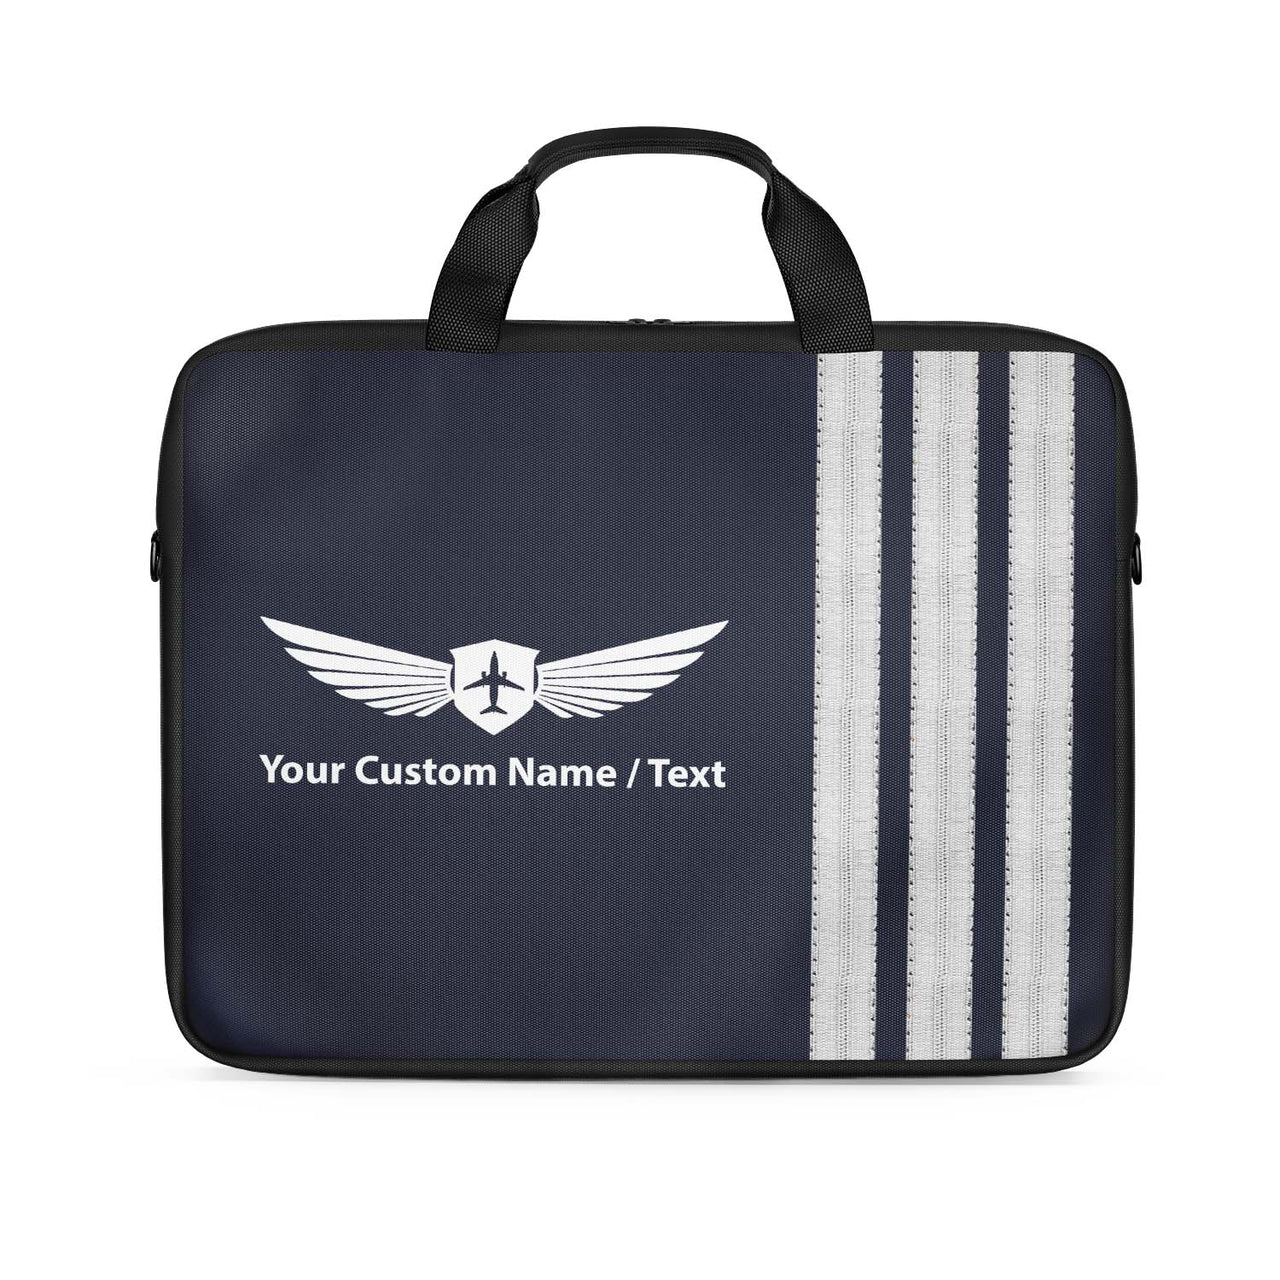 Customizable Name & Silver Pilot Epaulettes (4,3,2 Lines) Laptop & Tablet Bags